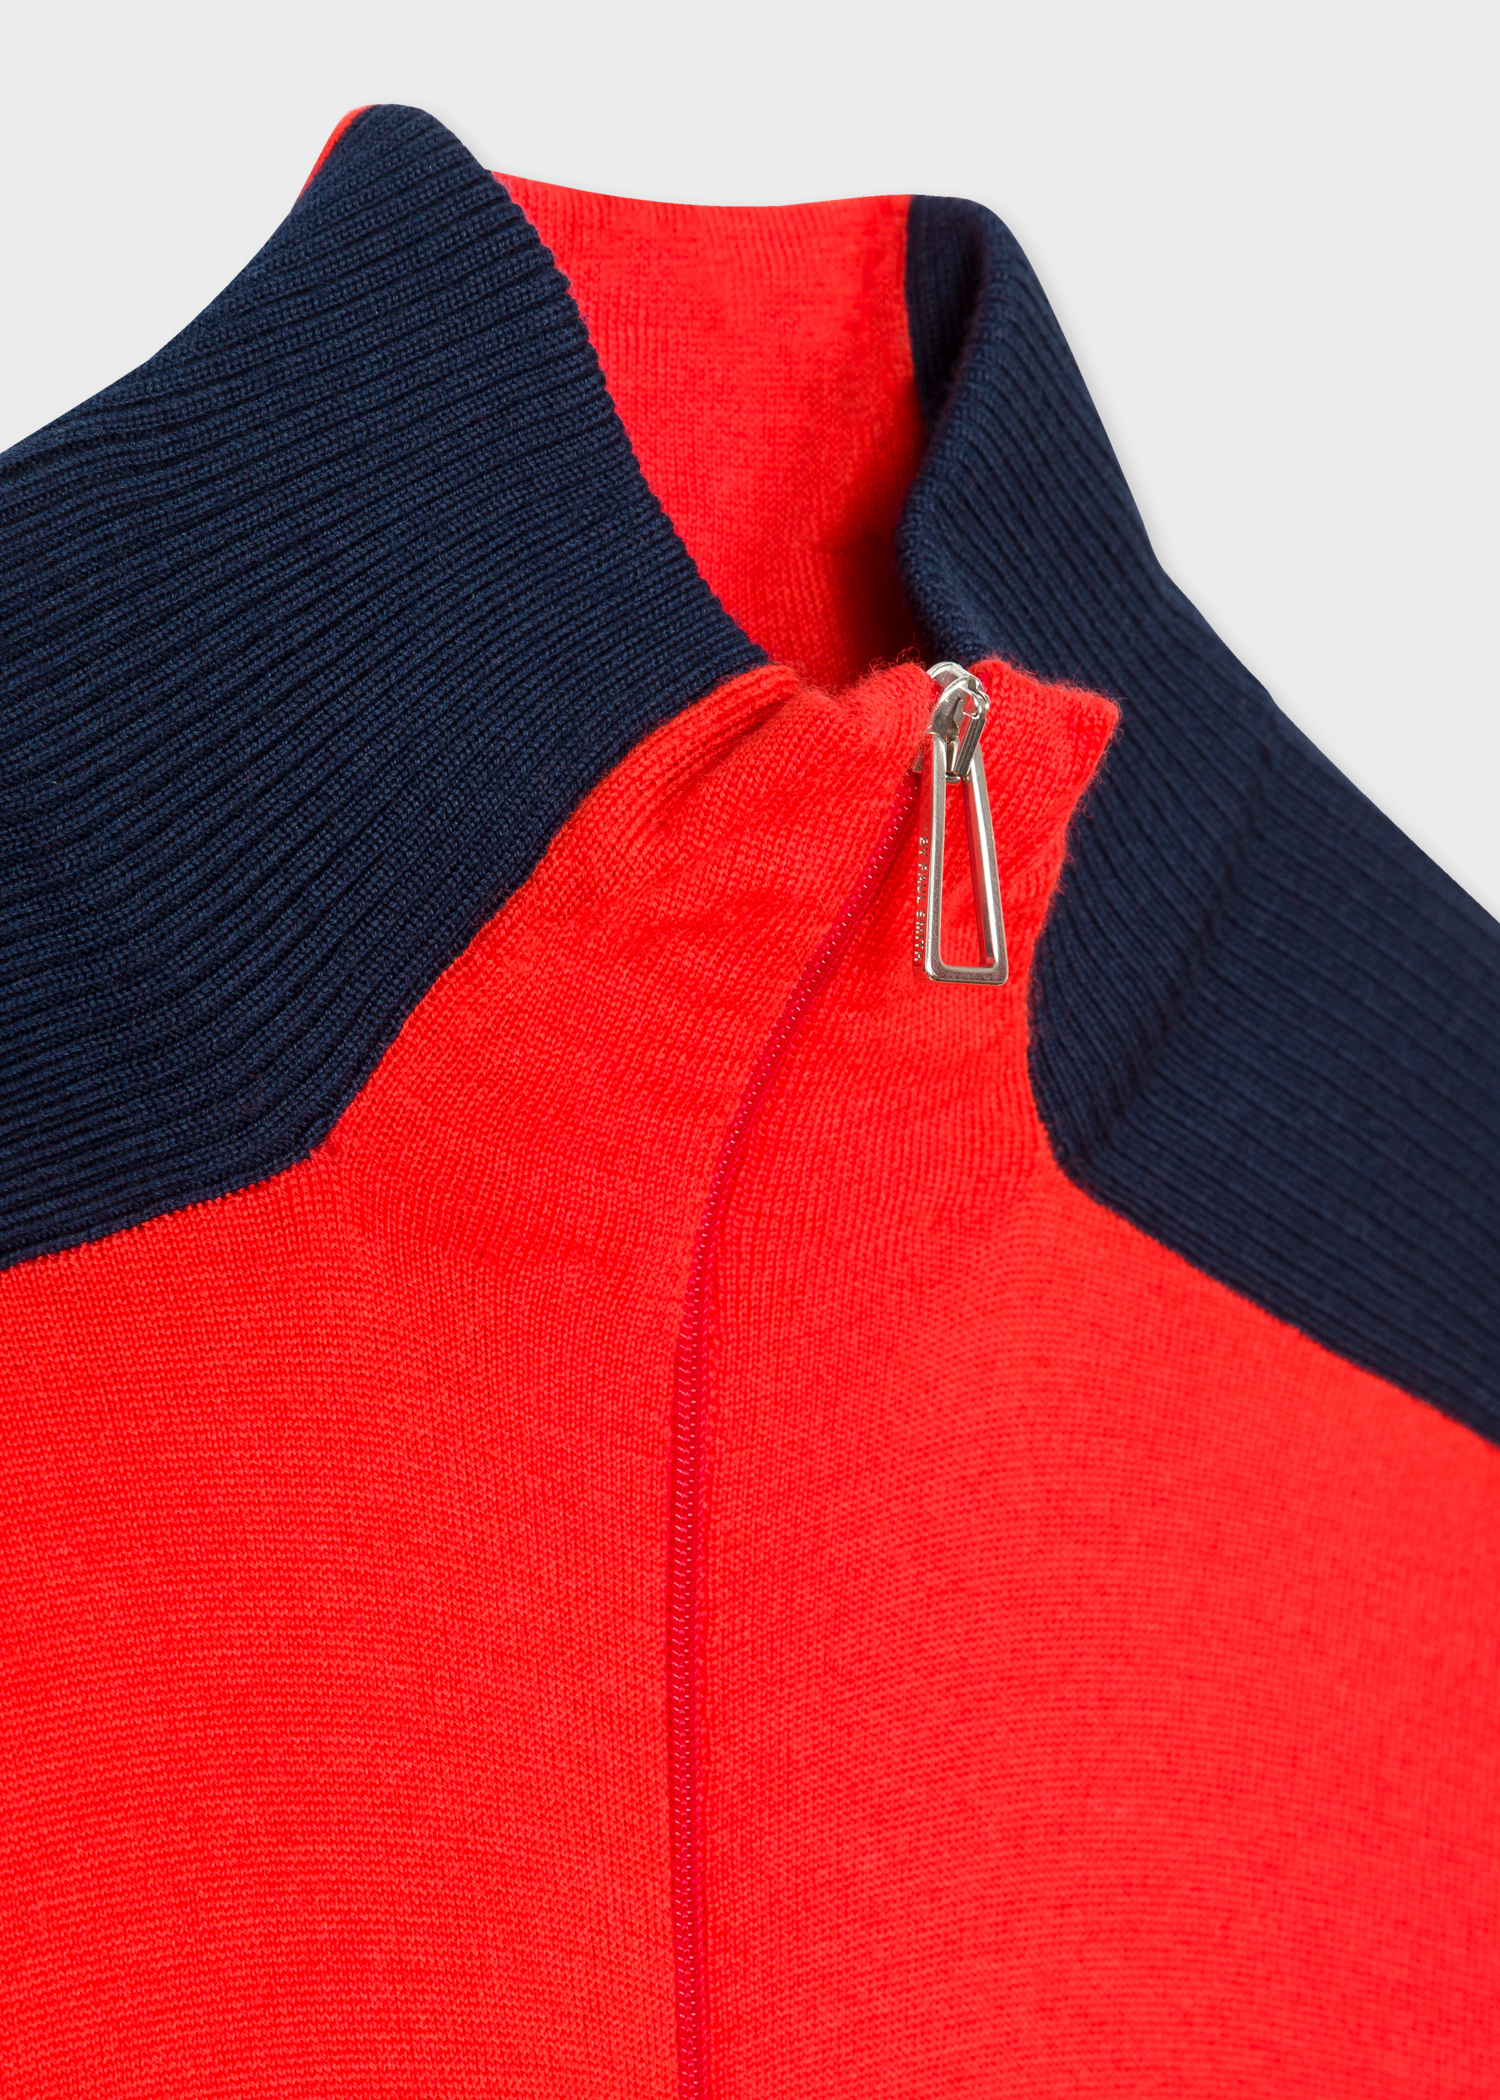 Detail view - Women's Red Colour-Block Half-Zip Wool Sweater Paul Smith